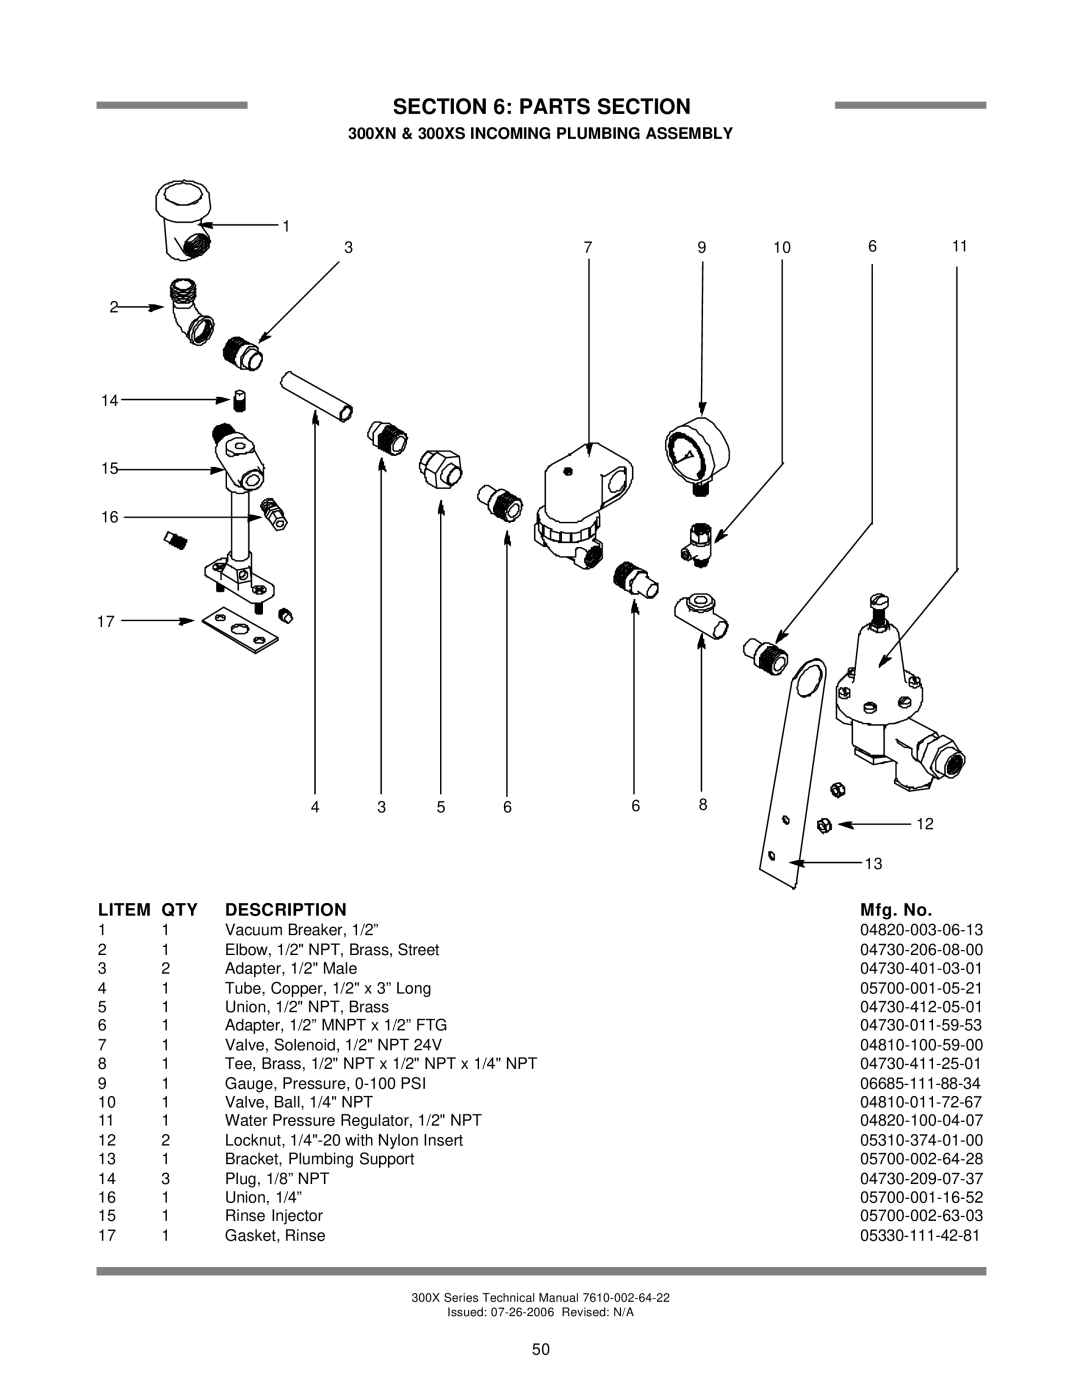 Jackson 300XLT technical manual Litem, 300XN & 300XS INCOMING PLUMBING ASSEMBLY, Parts Section, Description, Mfg. No 